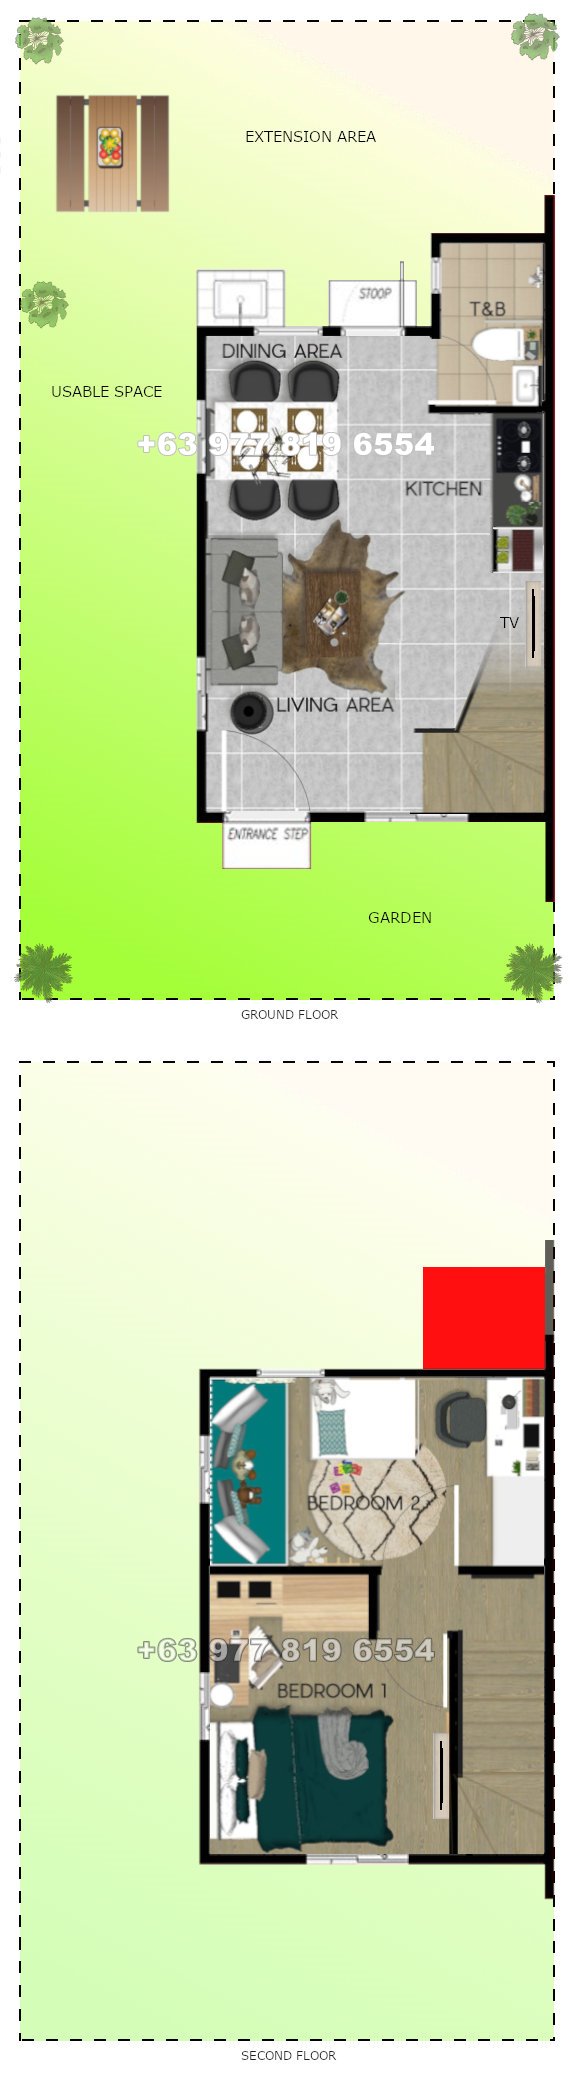 Ezabelle Floor Plan House and Lot in Bataan